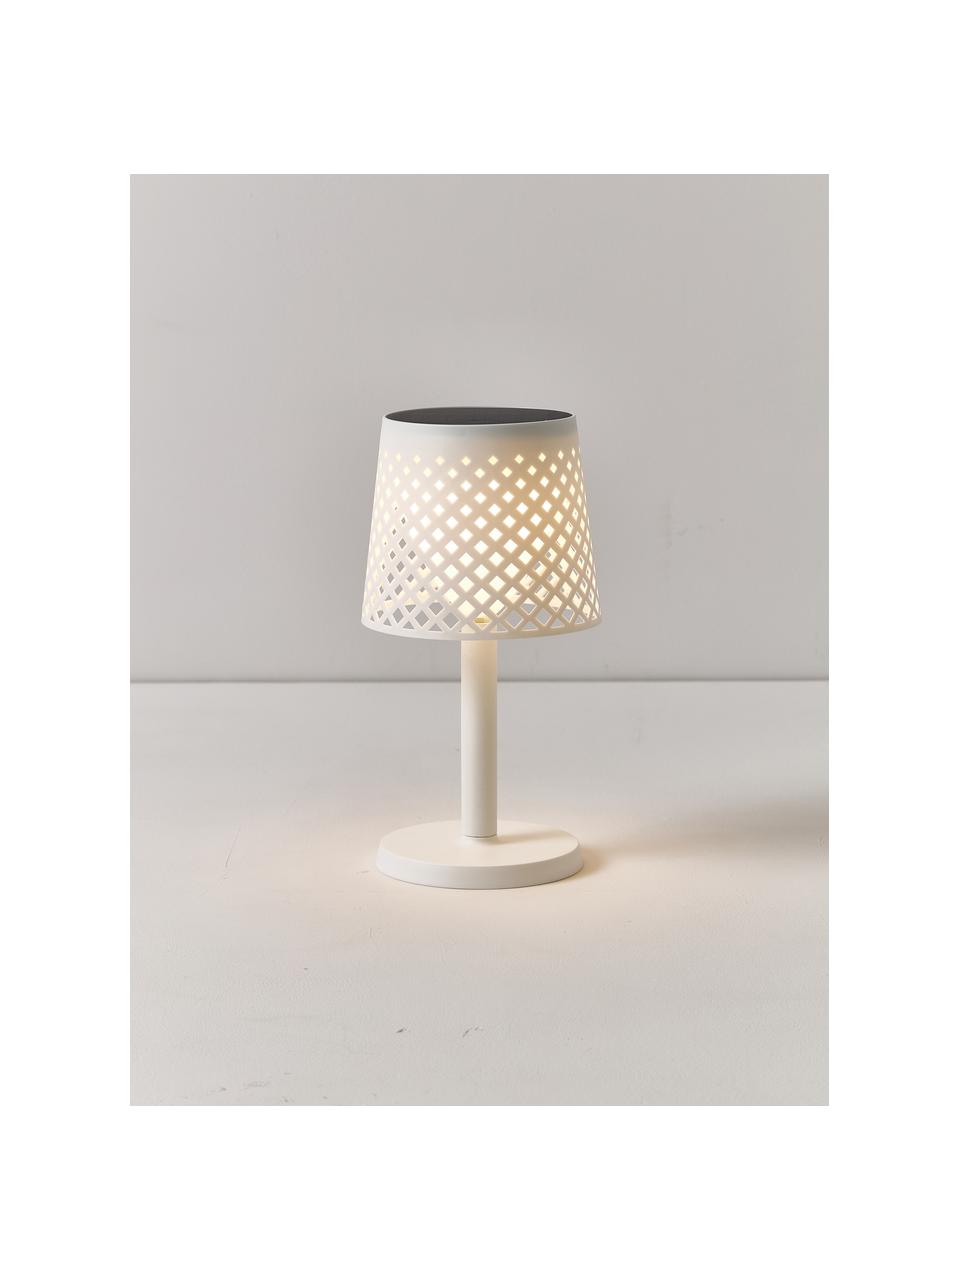 Solar LED-Lampe Greta 5in1, Kunststoff, Weiß, Ø 16 x H 64 cm